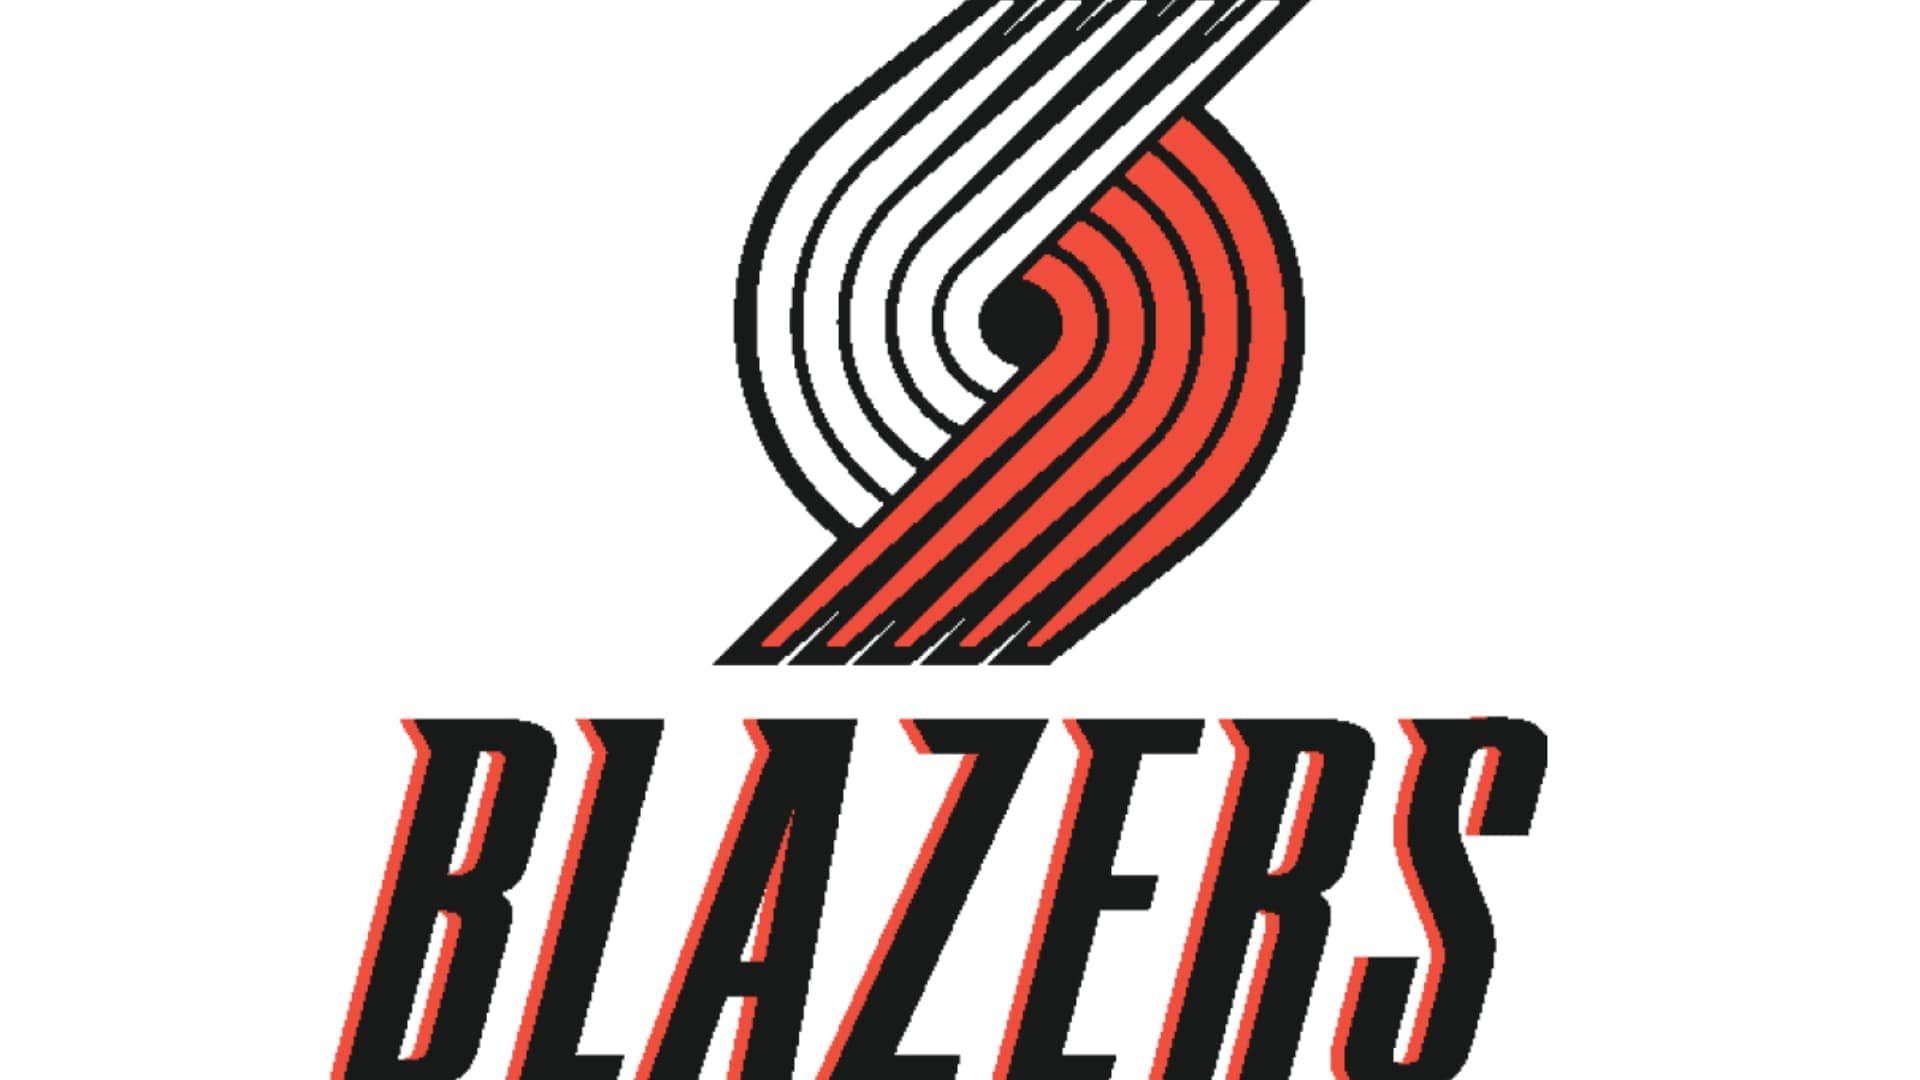 Portland Trail Blazers - NBA teams in alphabetical order